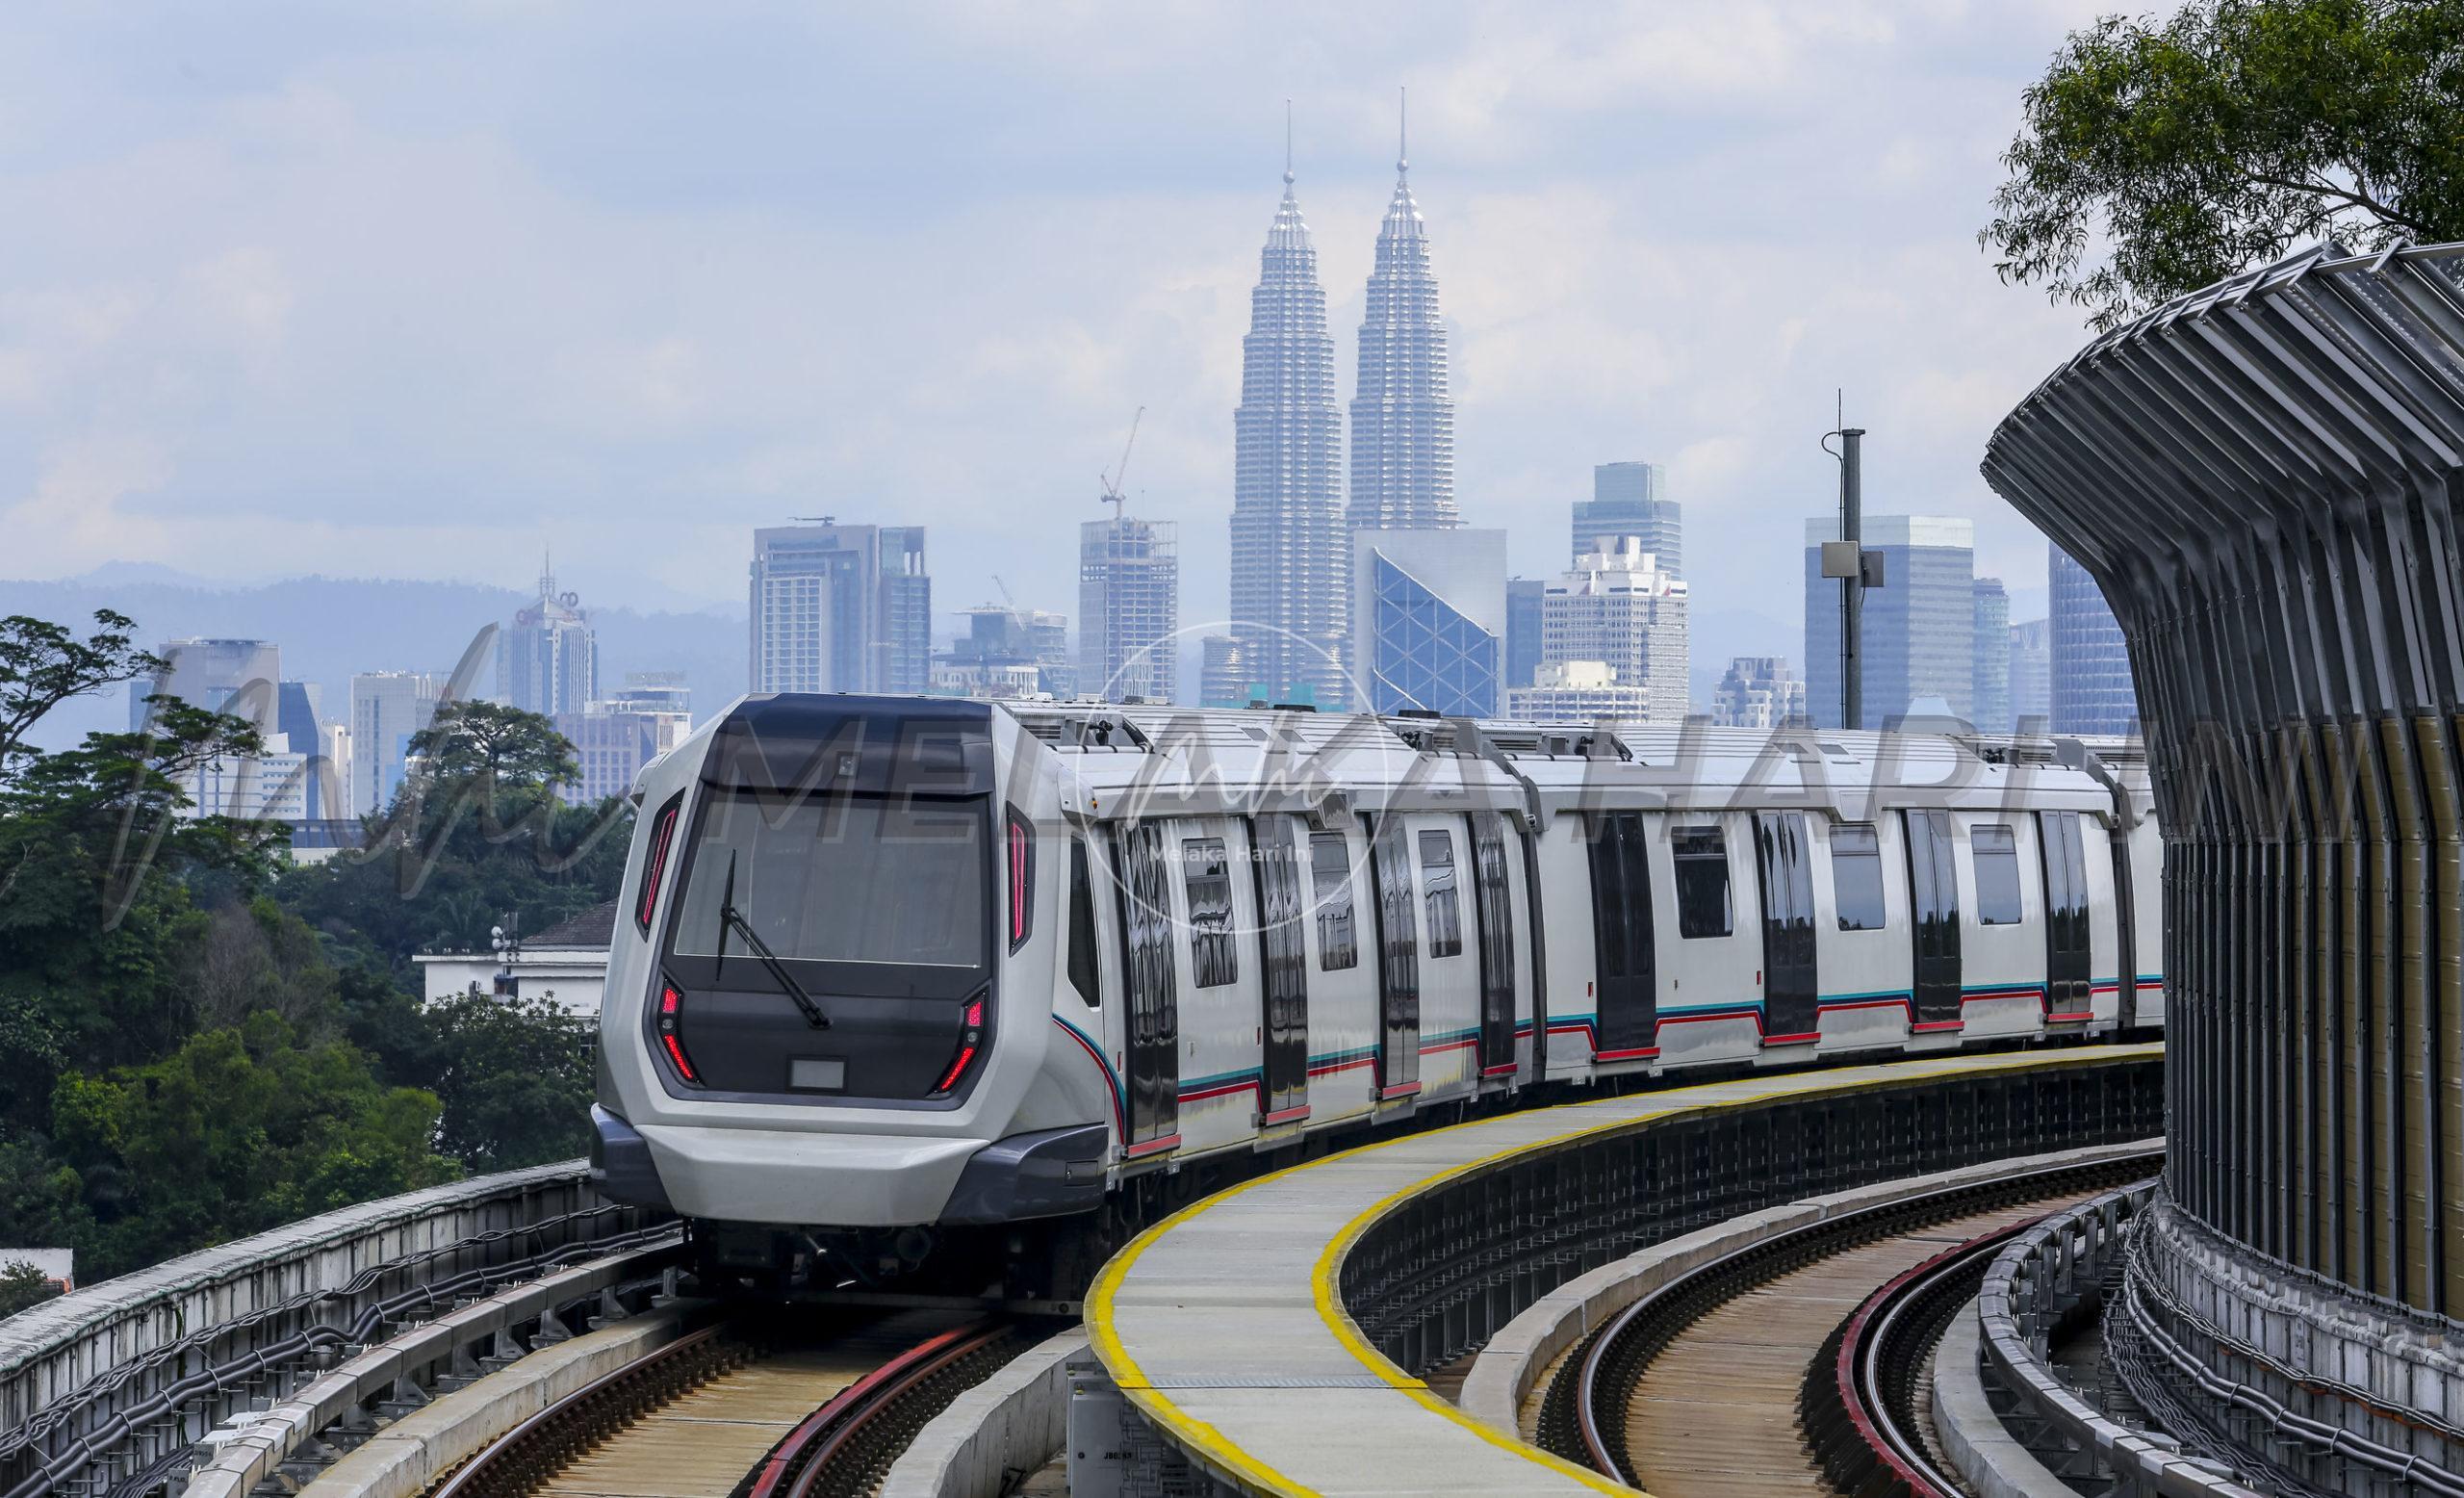 Malaysia Mrt Train